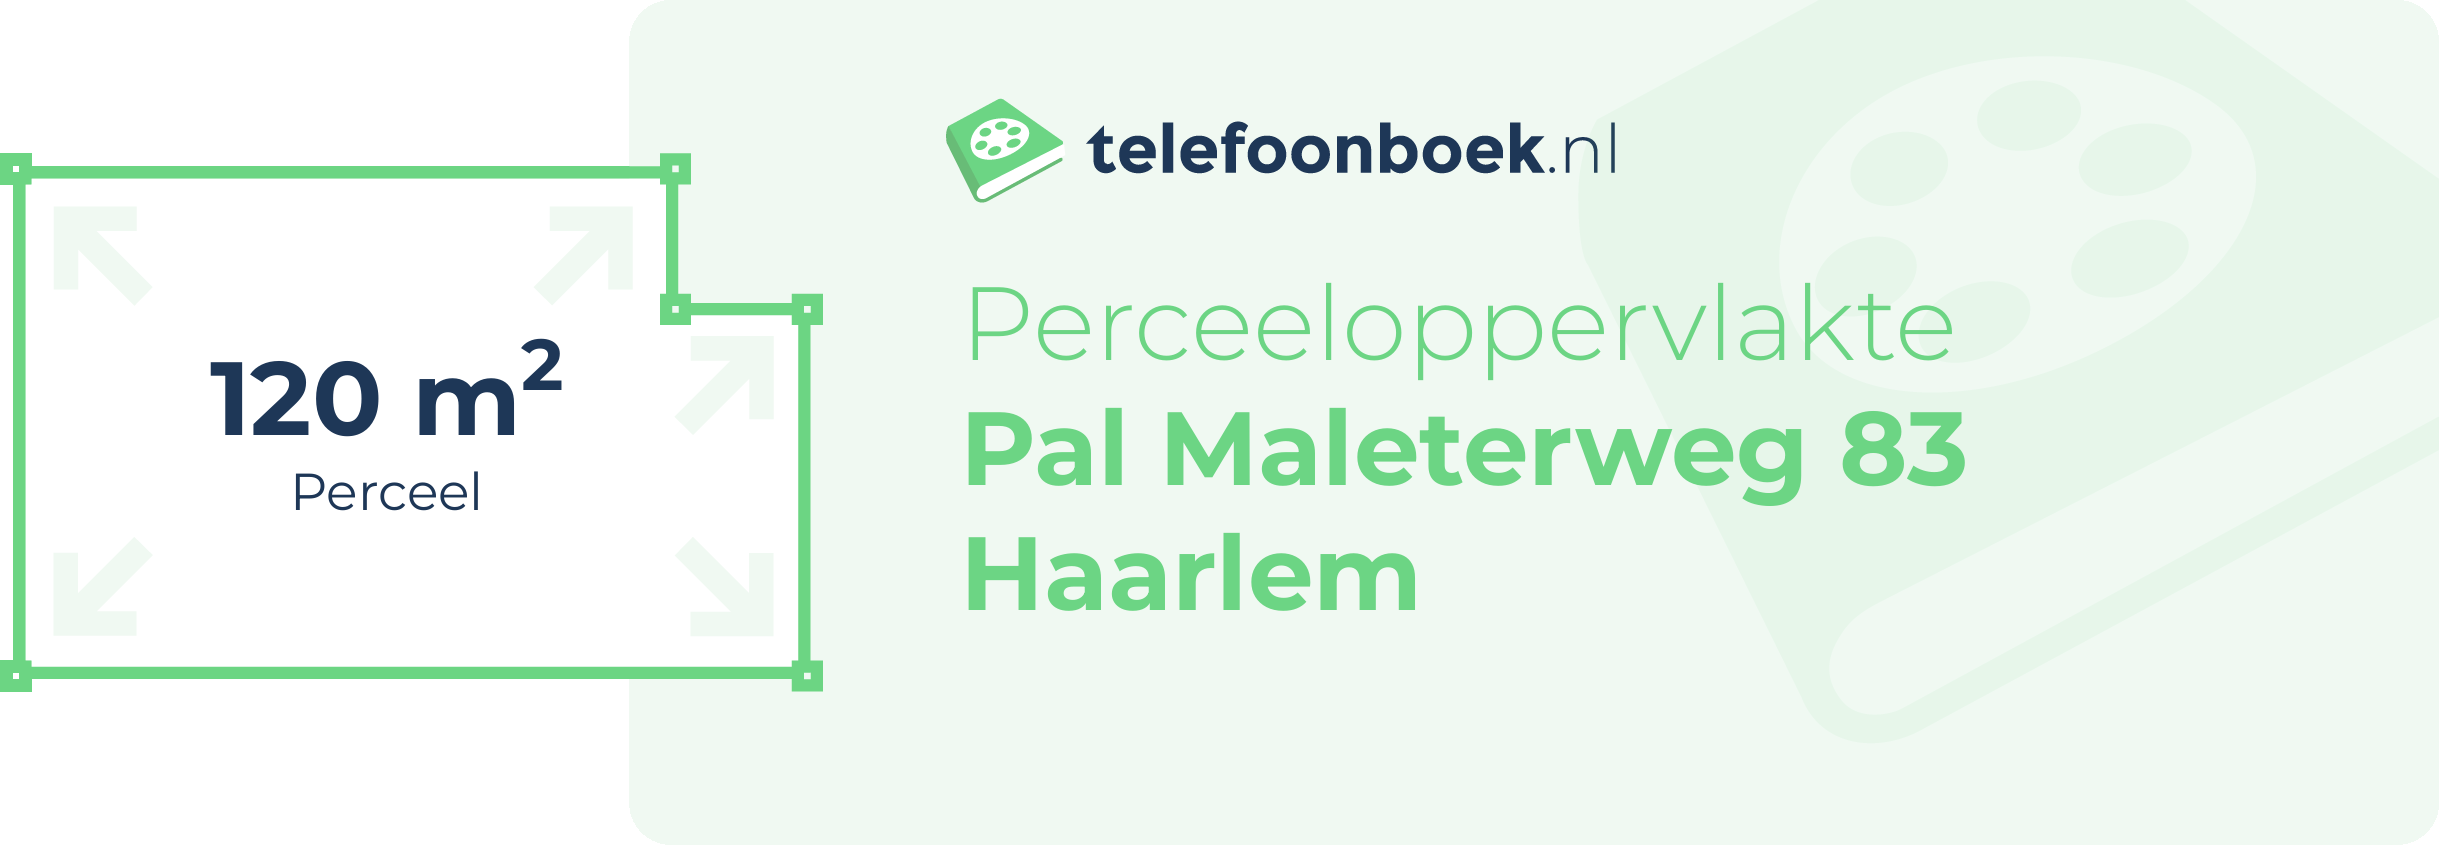 Perceeloppervlakte Pal Maleterweg 83 Haarlem